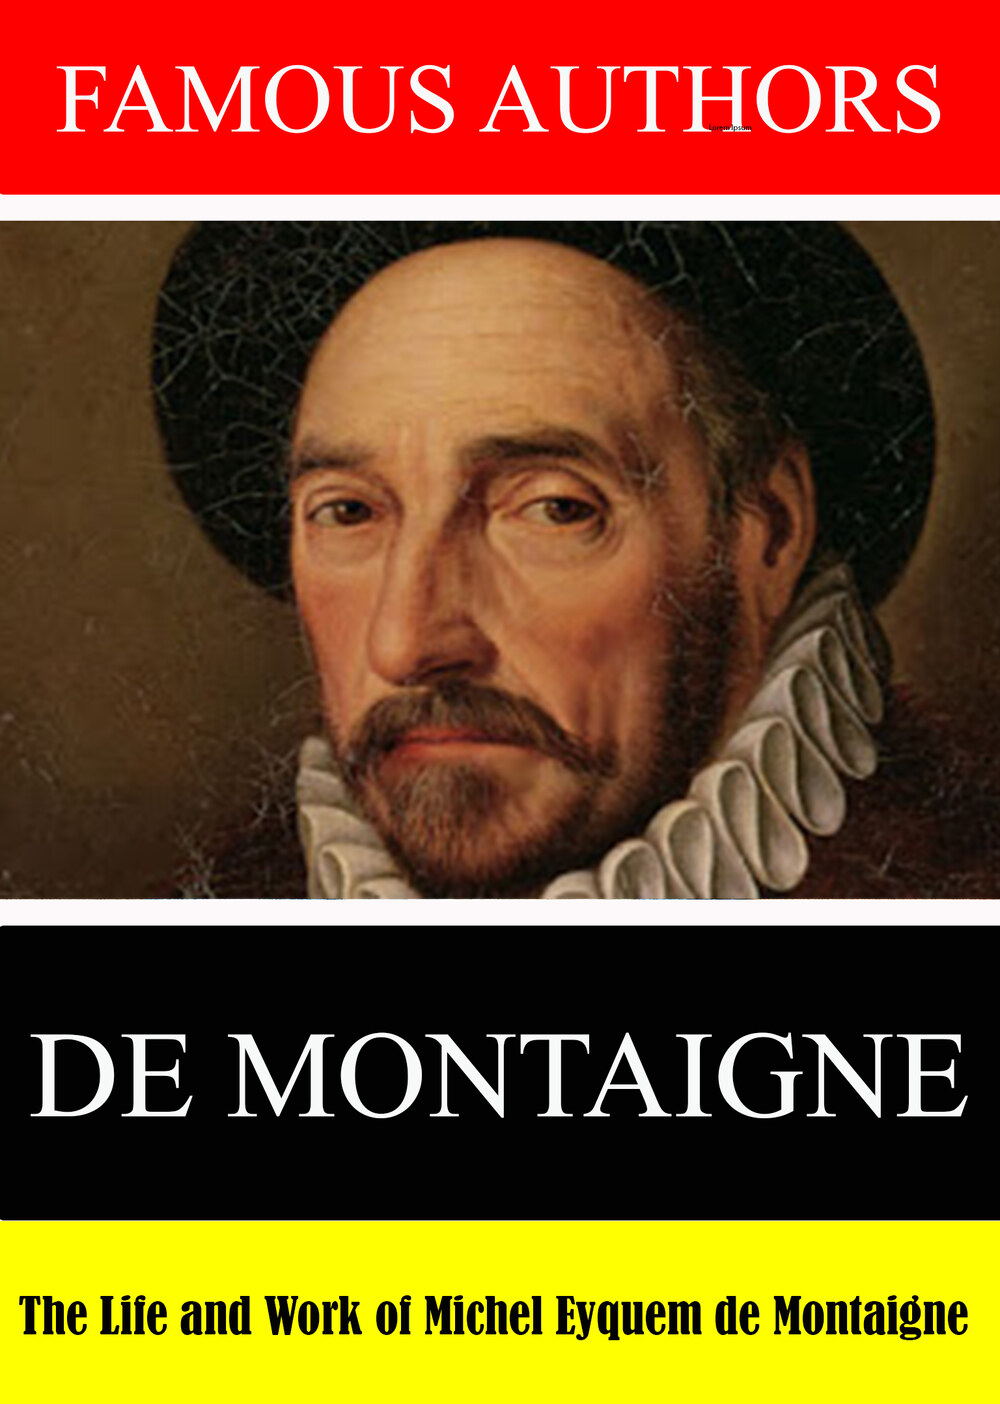 L7898 - Famous Authors: The Life and Work of Michel Eyquem de Montaigne